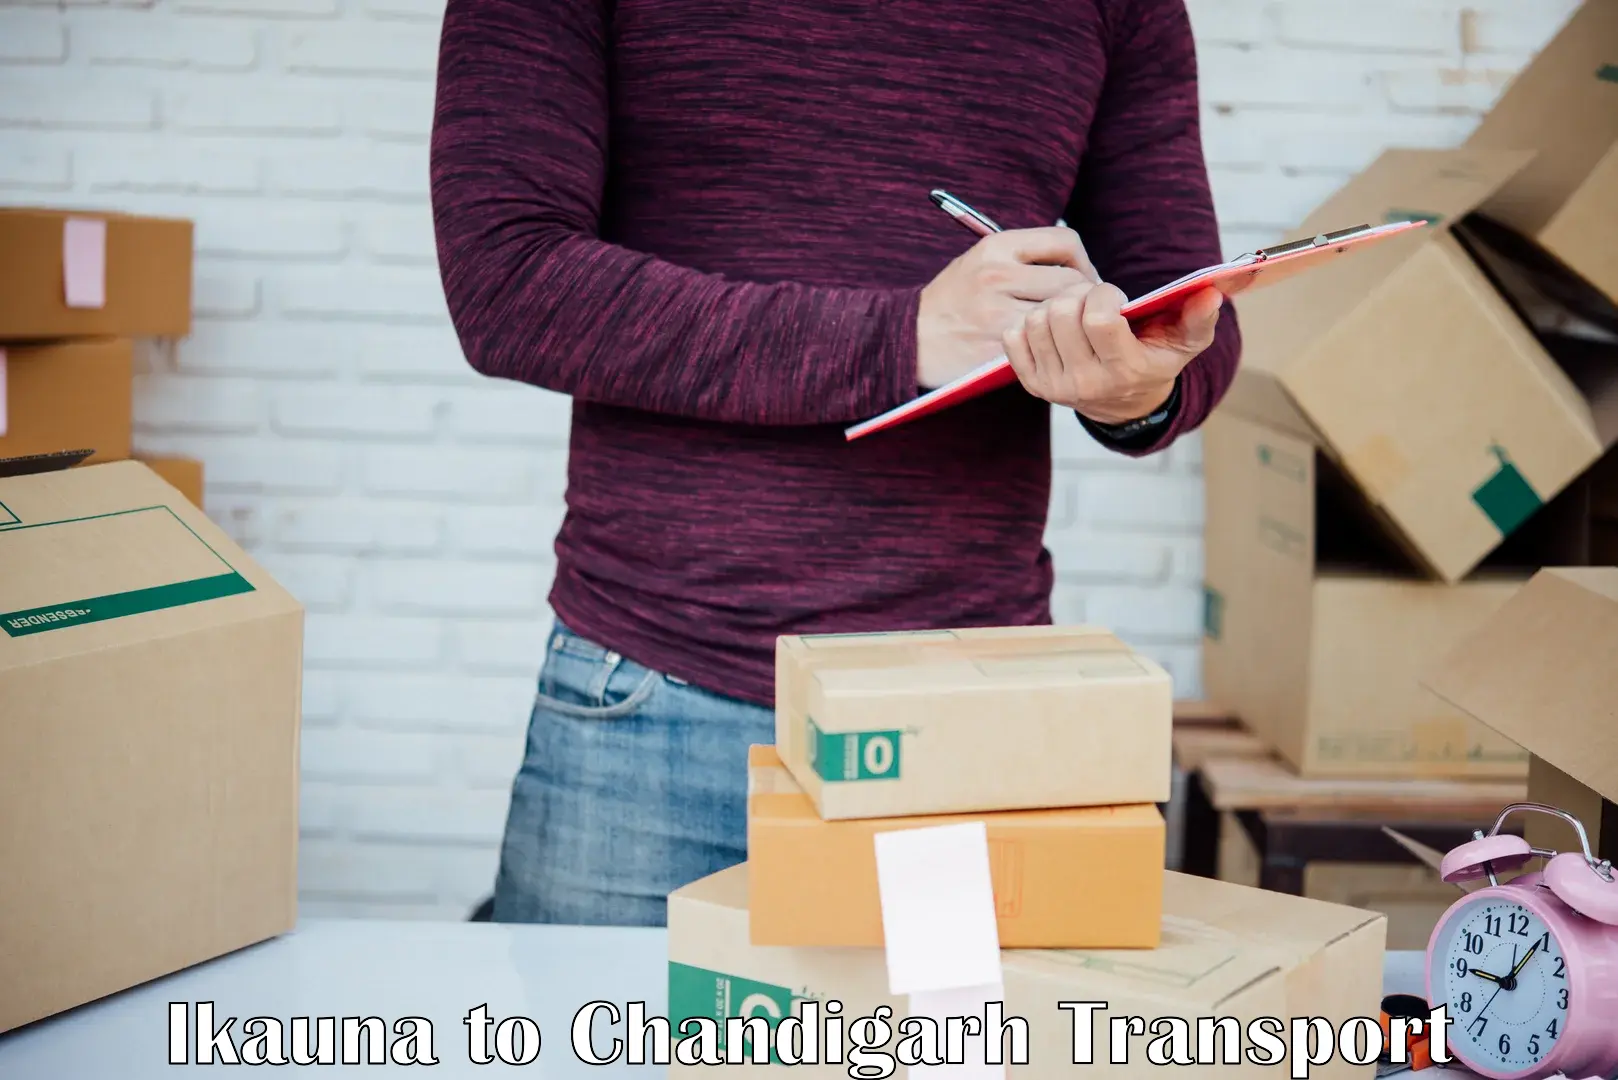 Delivery service Ikauna to Chandigarh